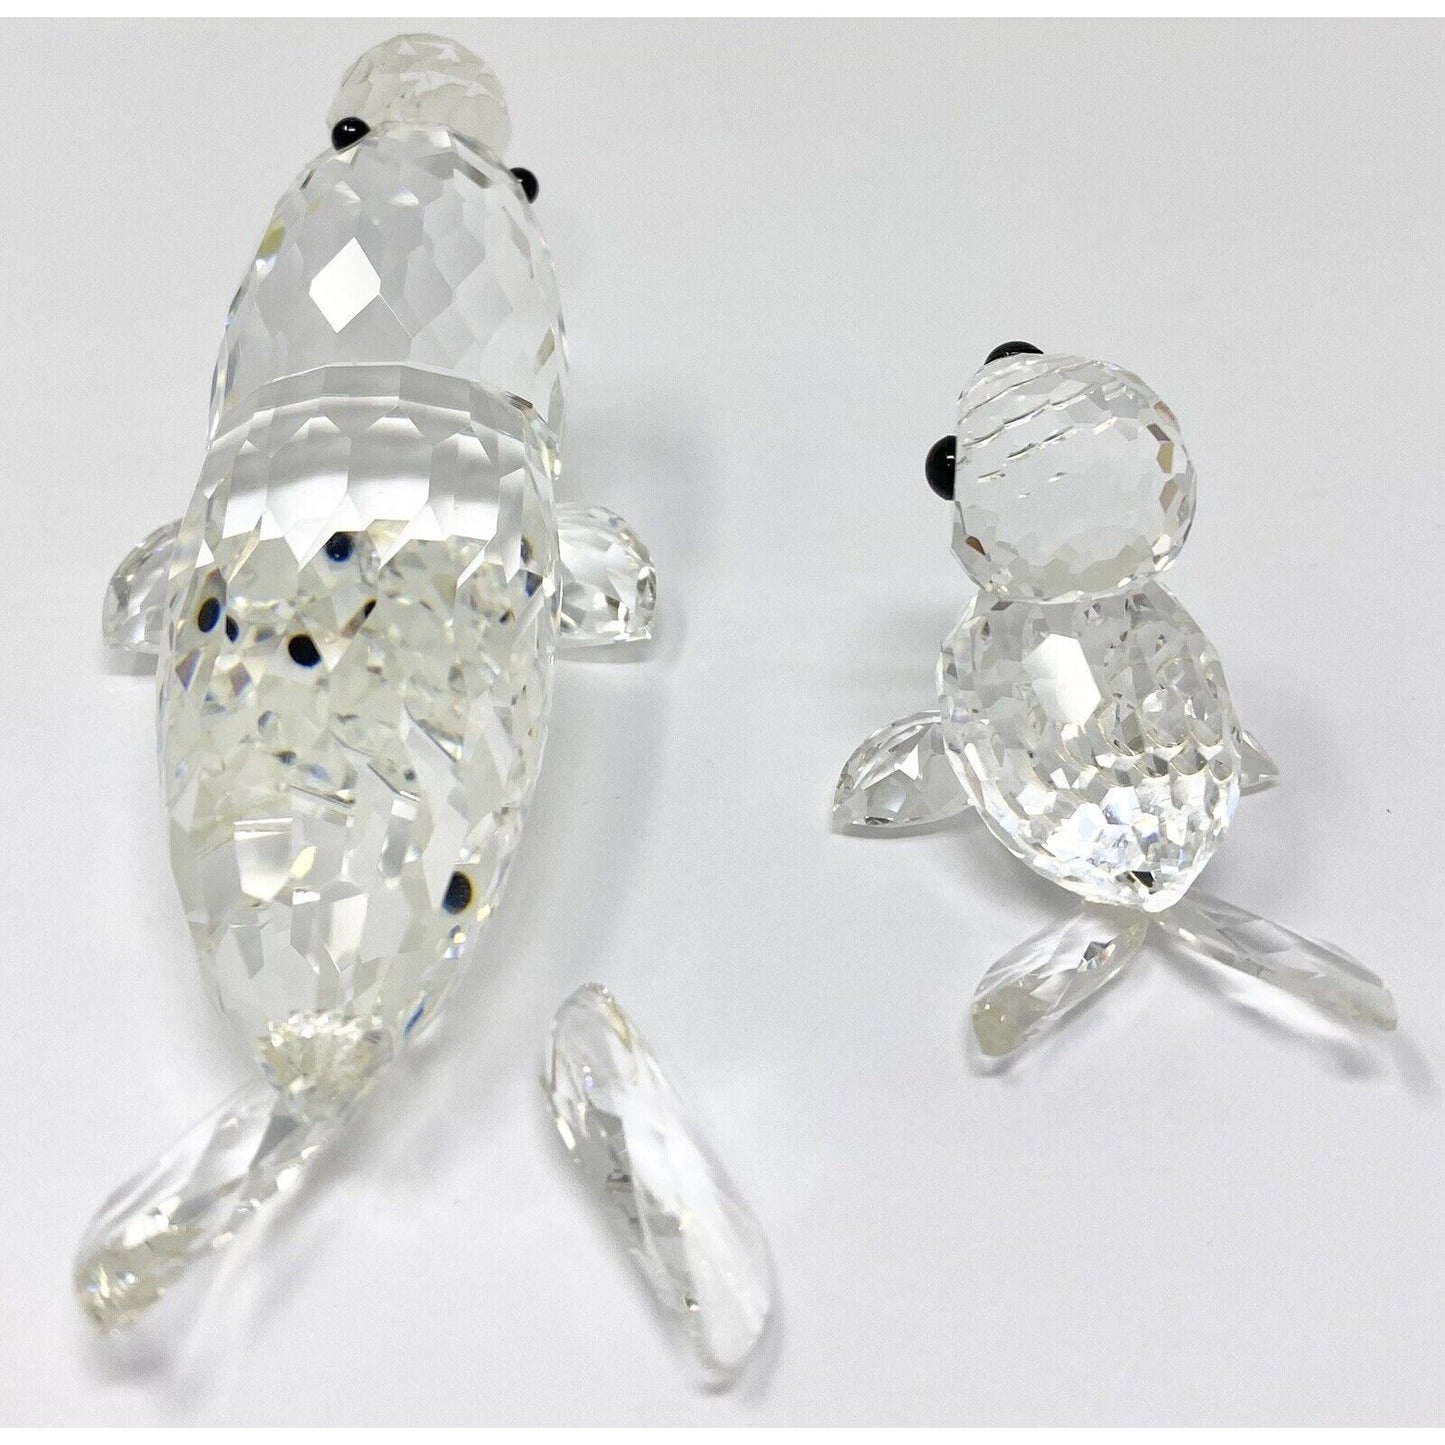 READ FIRST Swarovski Crystal Kingdom of Ice & Snow Figurines - Walrus, Seal